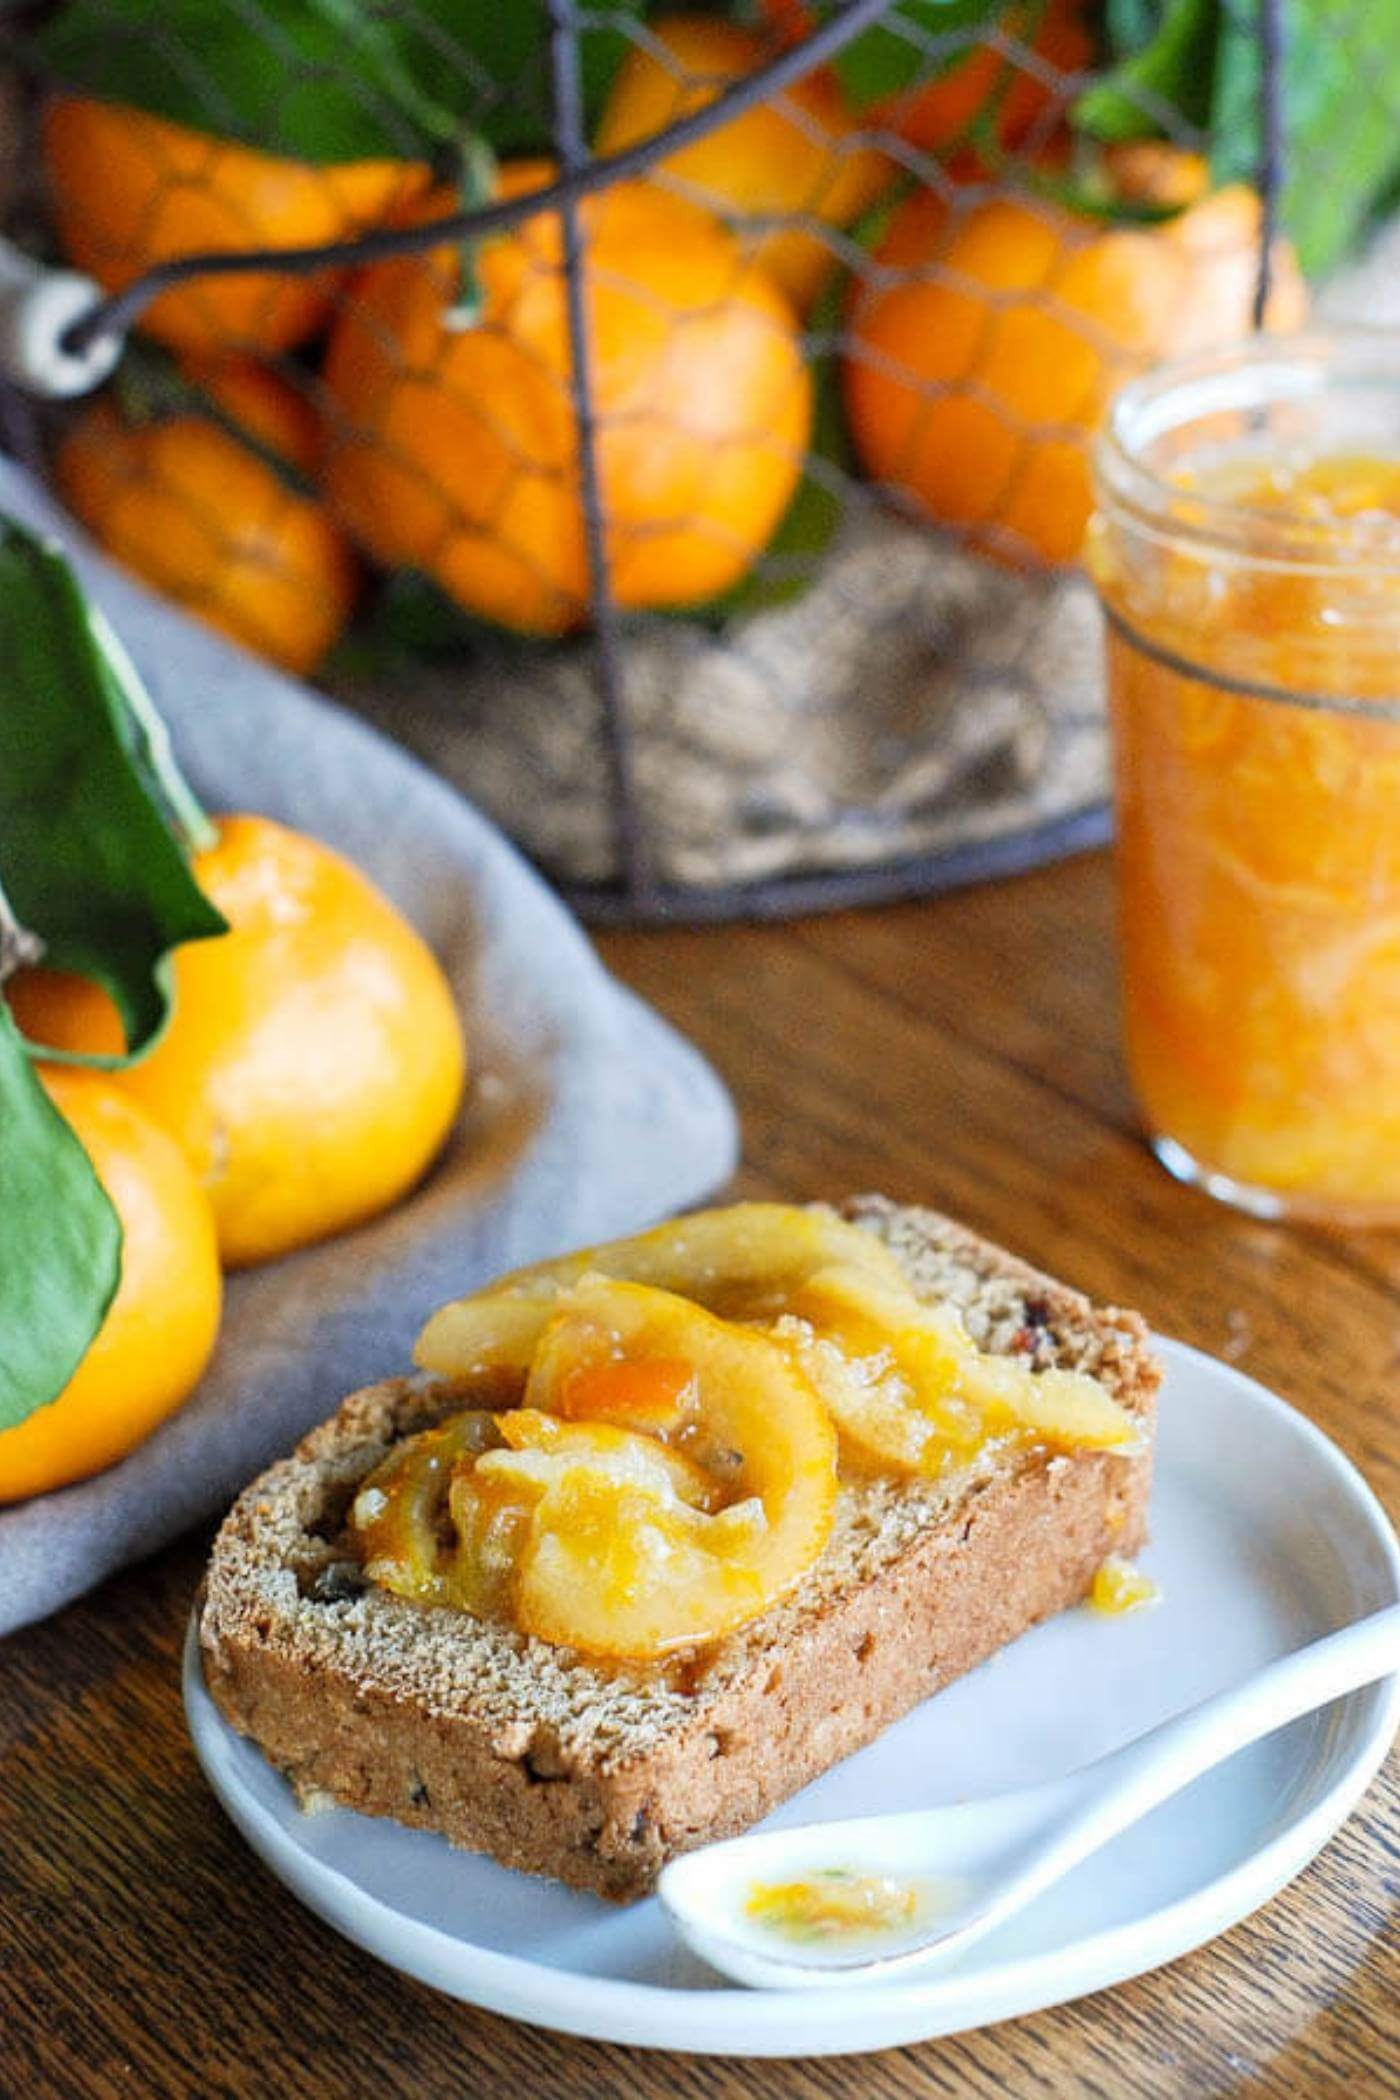 instant pot orange and lemon marmalade on bread.